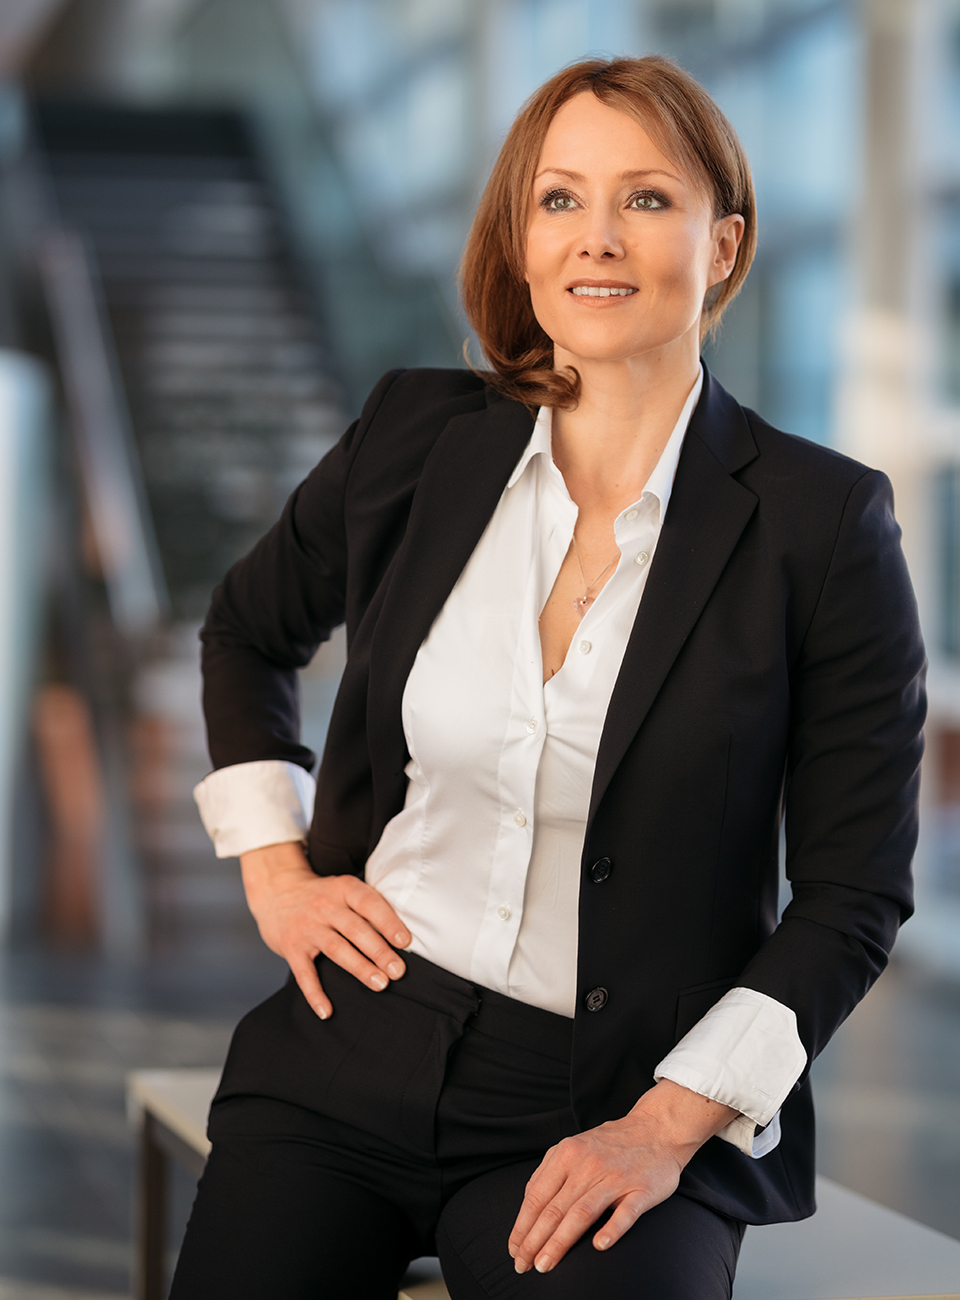 Nadine Anschütz, CEO